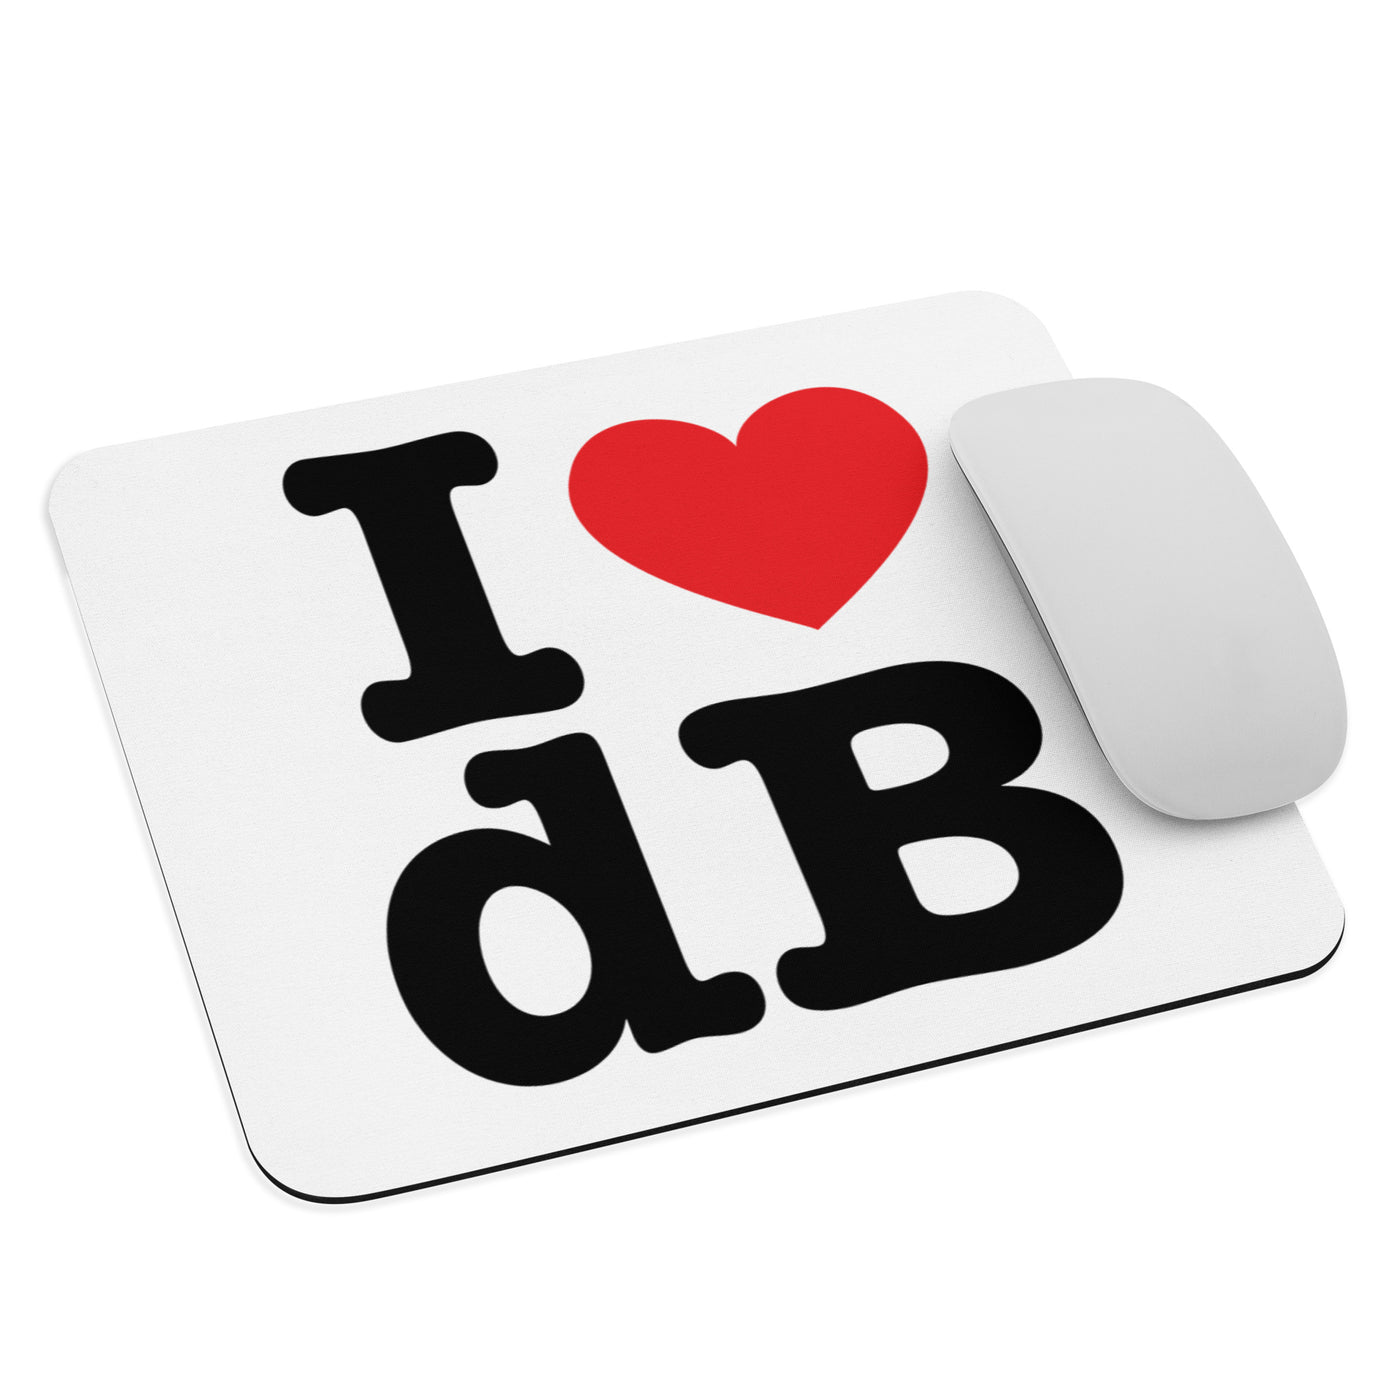 I HEART DB Mouse pad